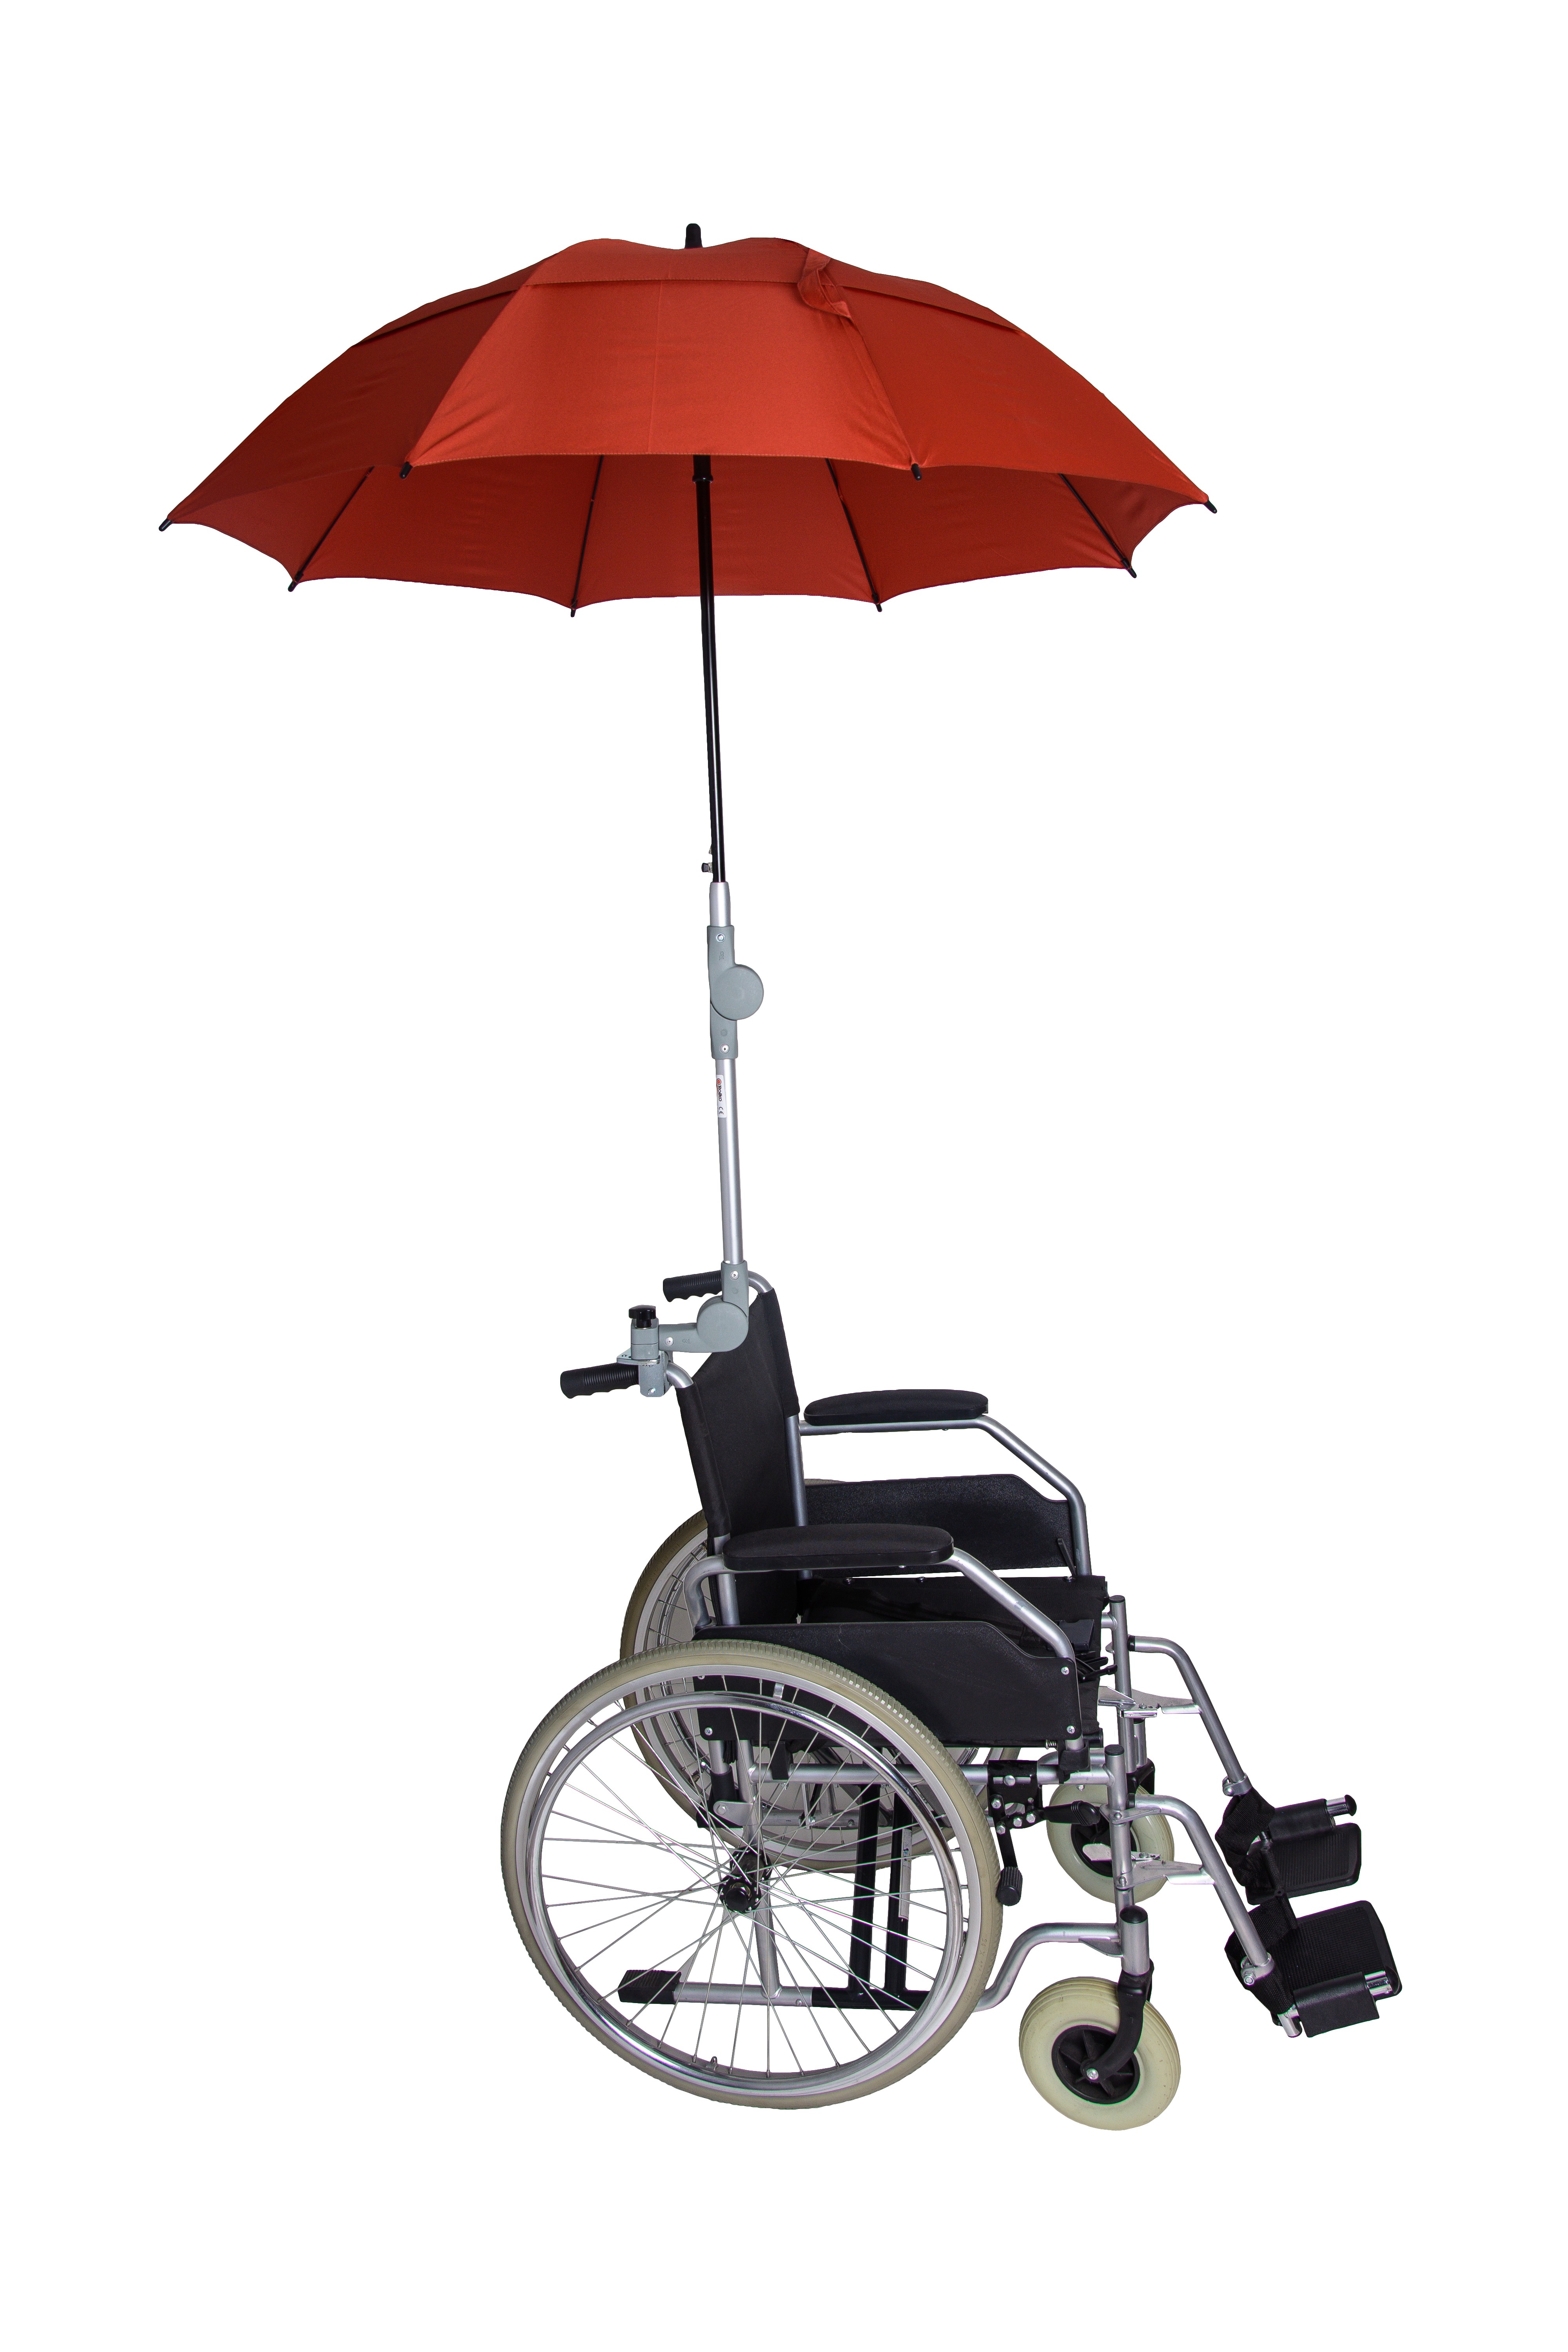 Rollatorschirm ROT/BRAUN Regenschirm Sonnenschirm inkl. Befestigung -  Pflegehome24